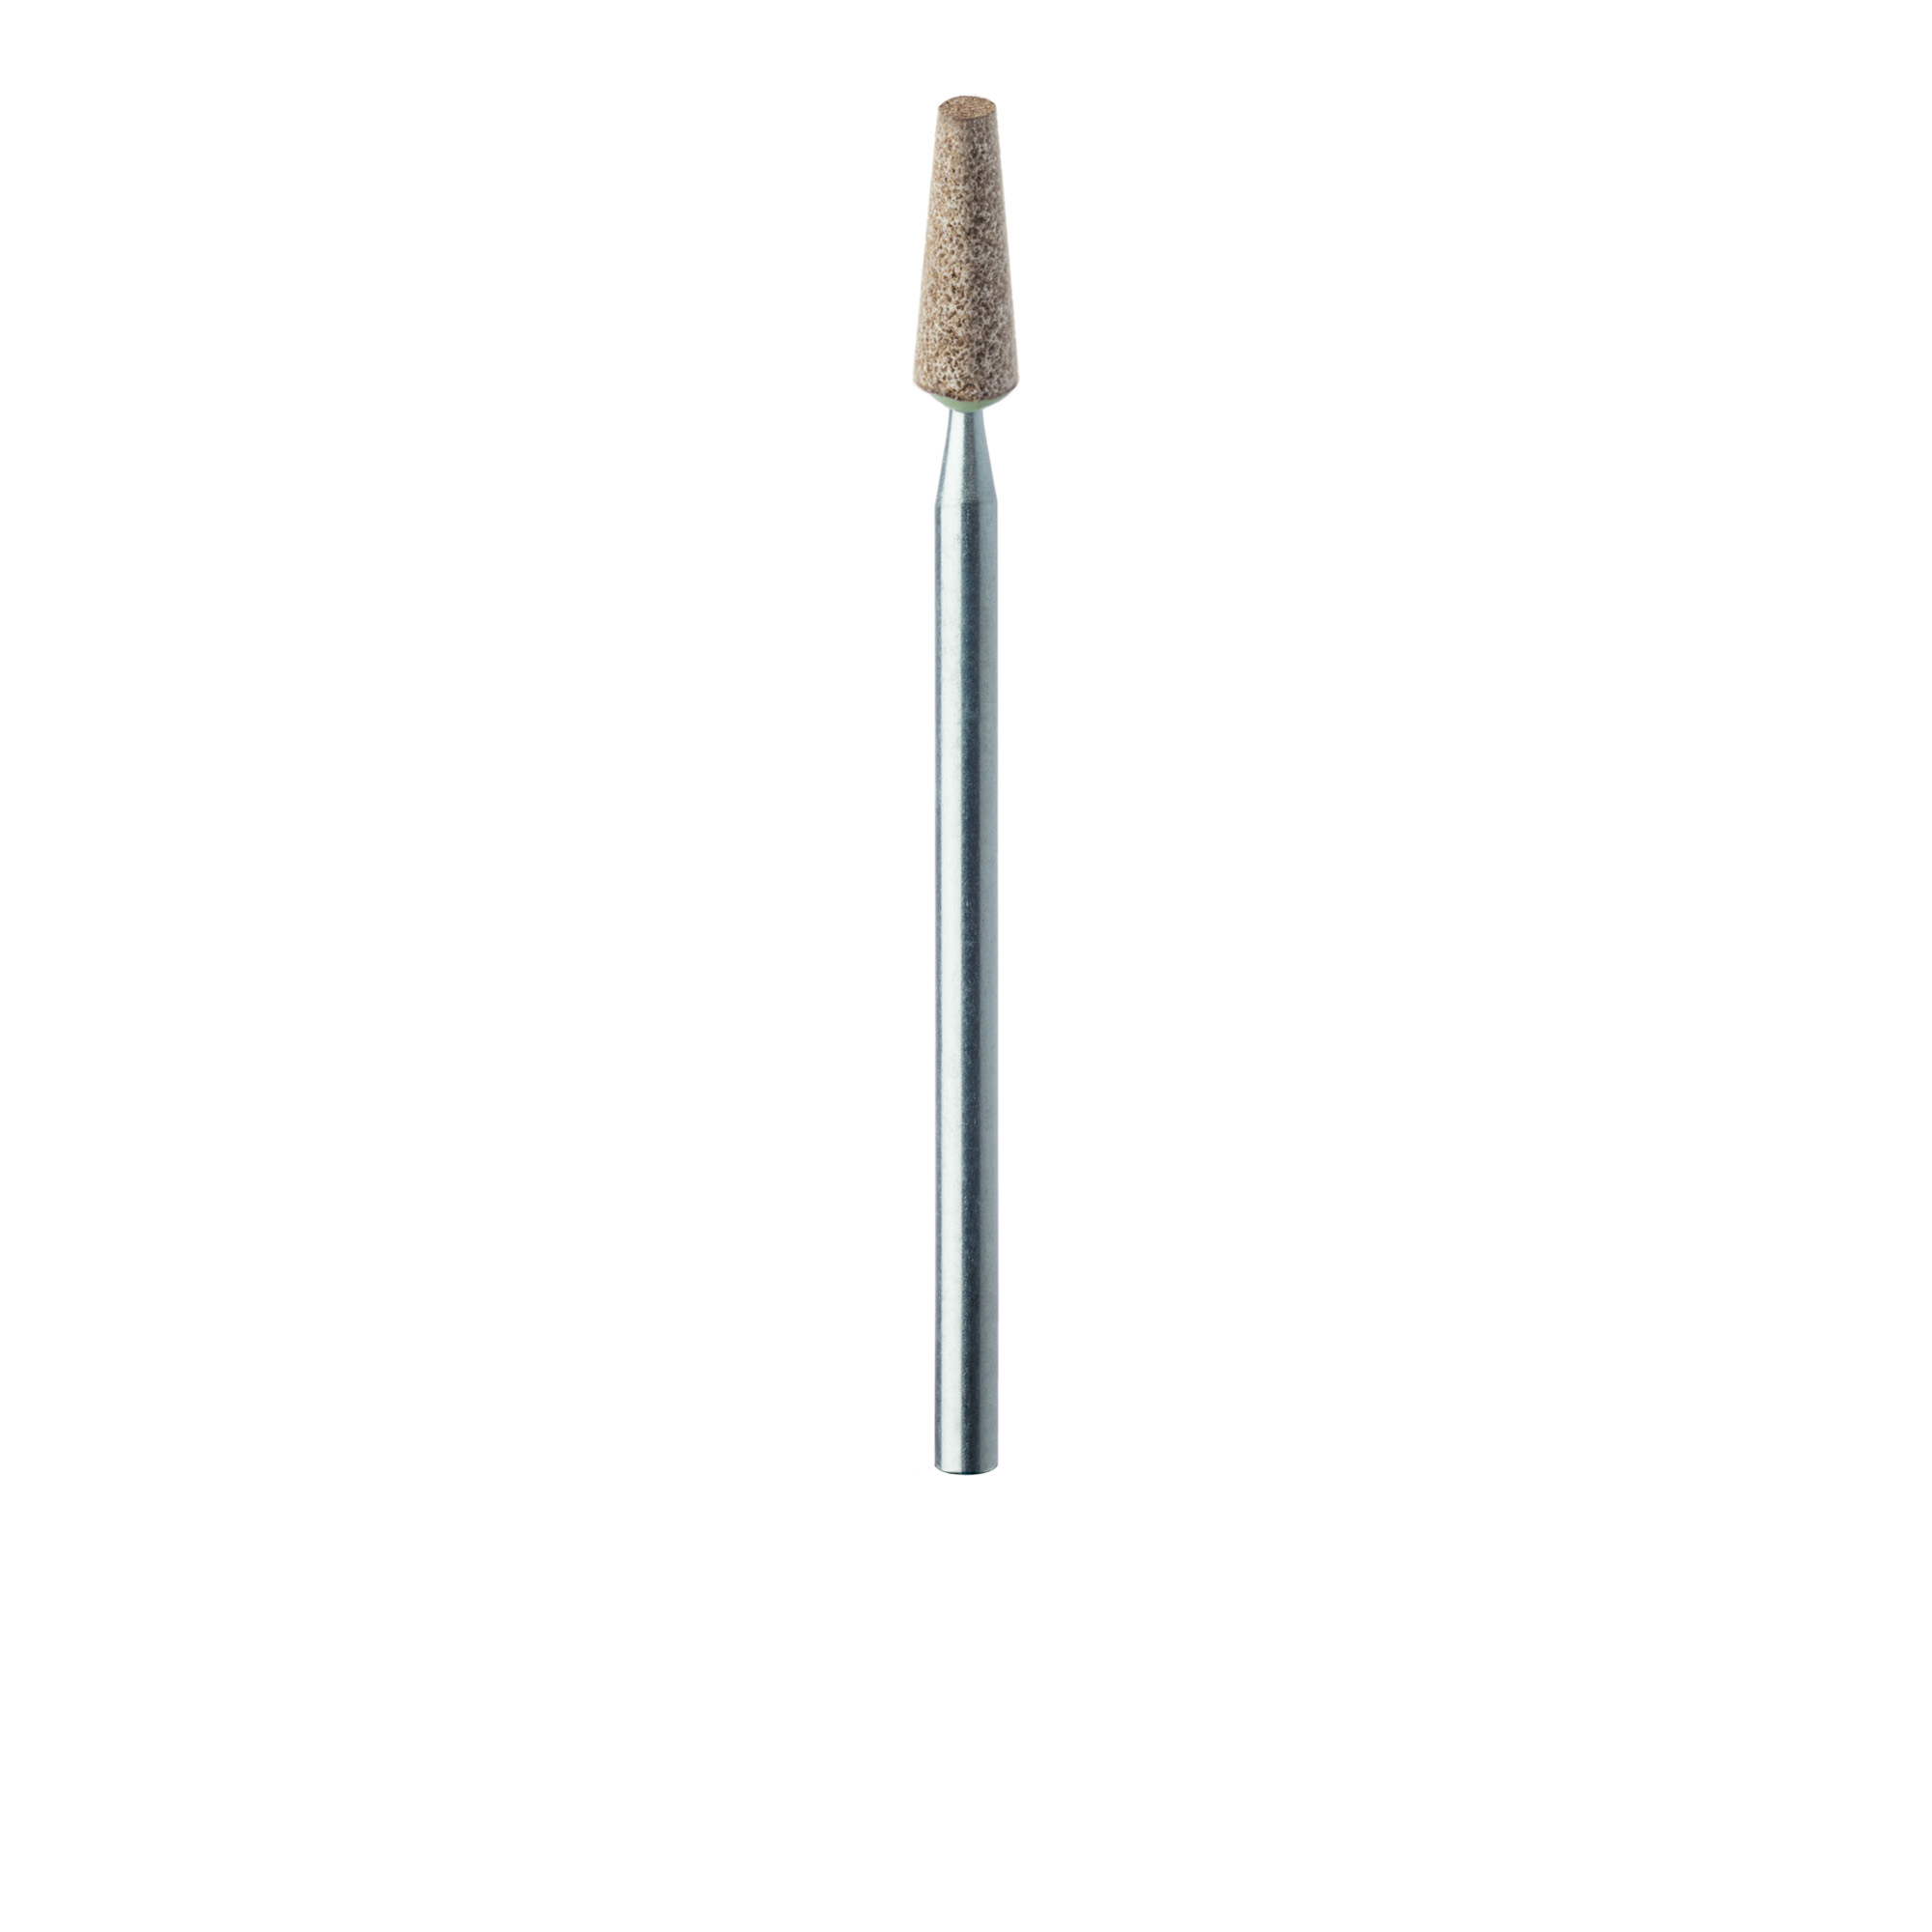 733-035-HP-LBRN Abrasive, Light Brown, Soft Bonding, Fine, Flat End Taper, 3.5mm Ø, HP